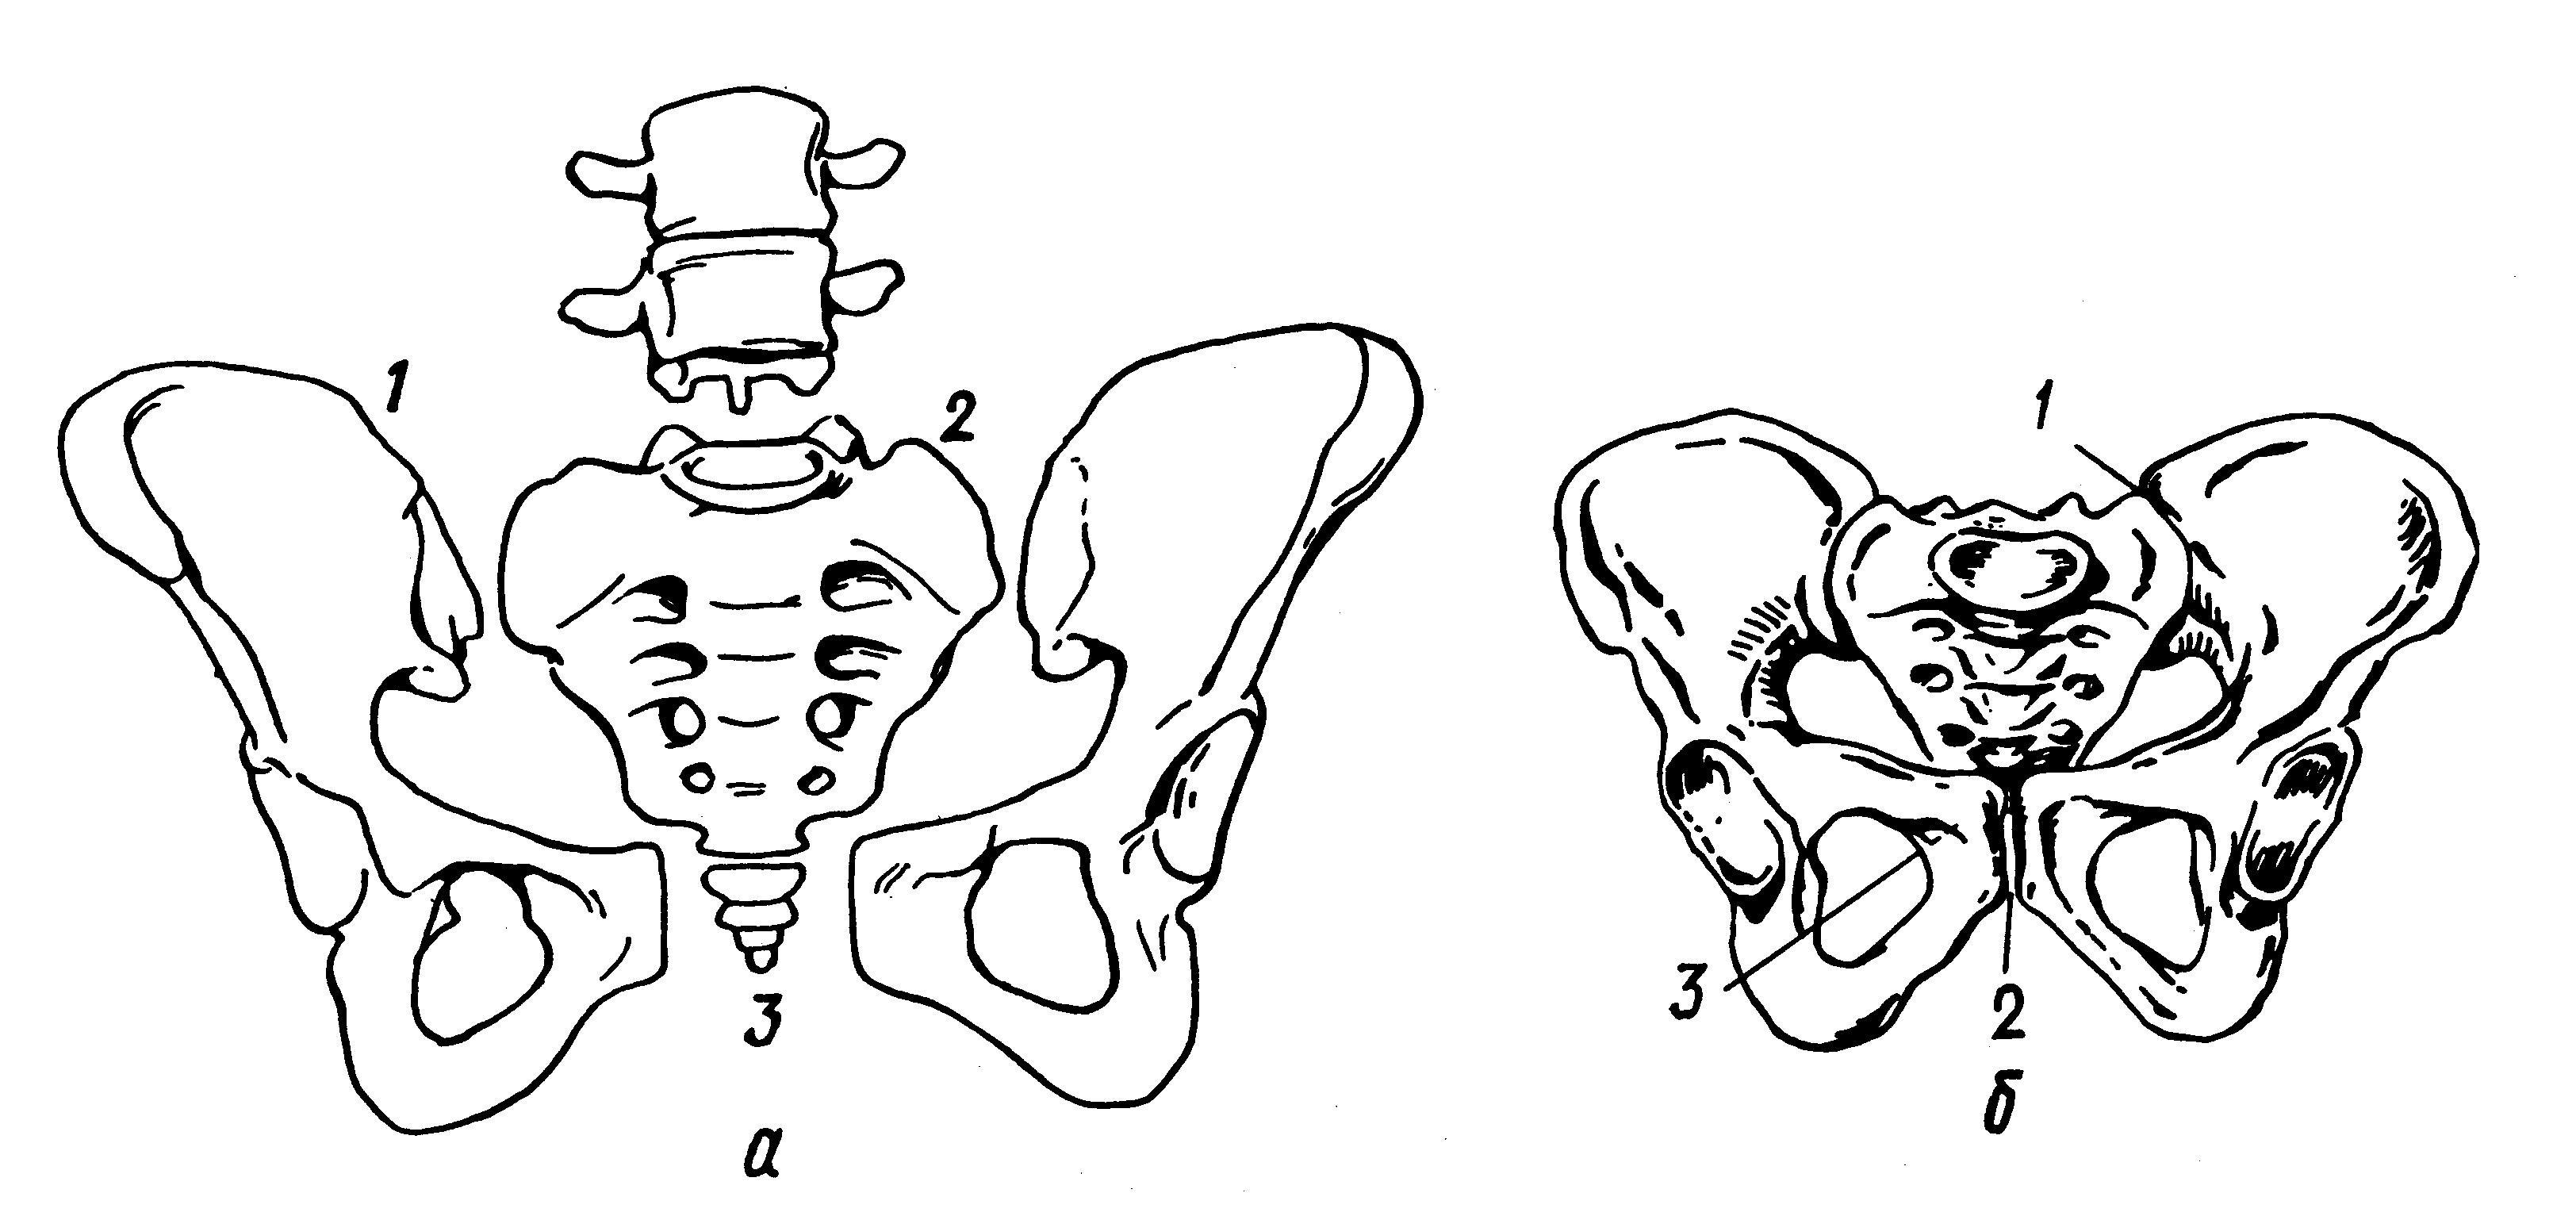 Скелет мужского таза вид спереди